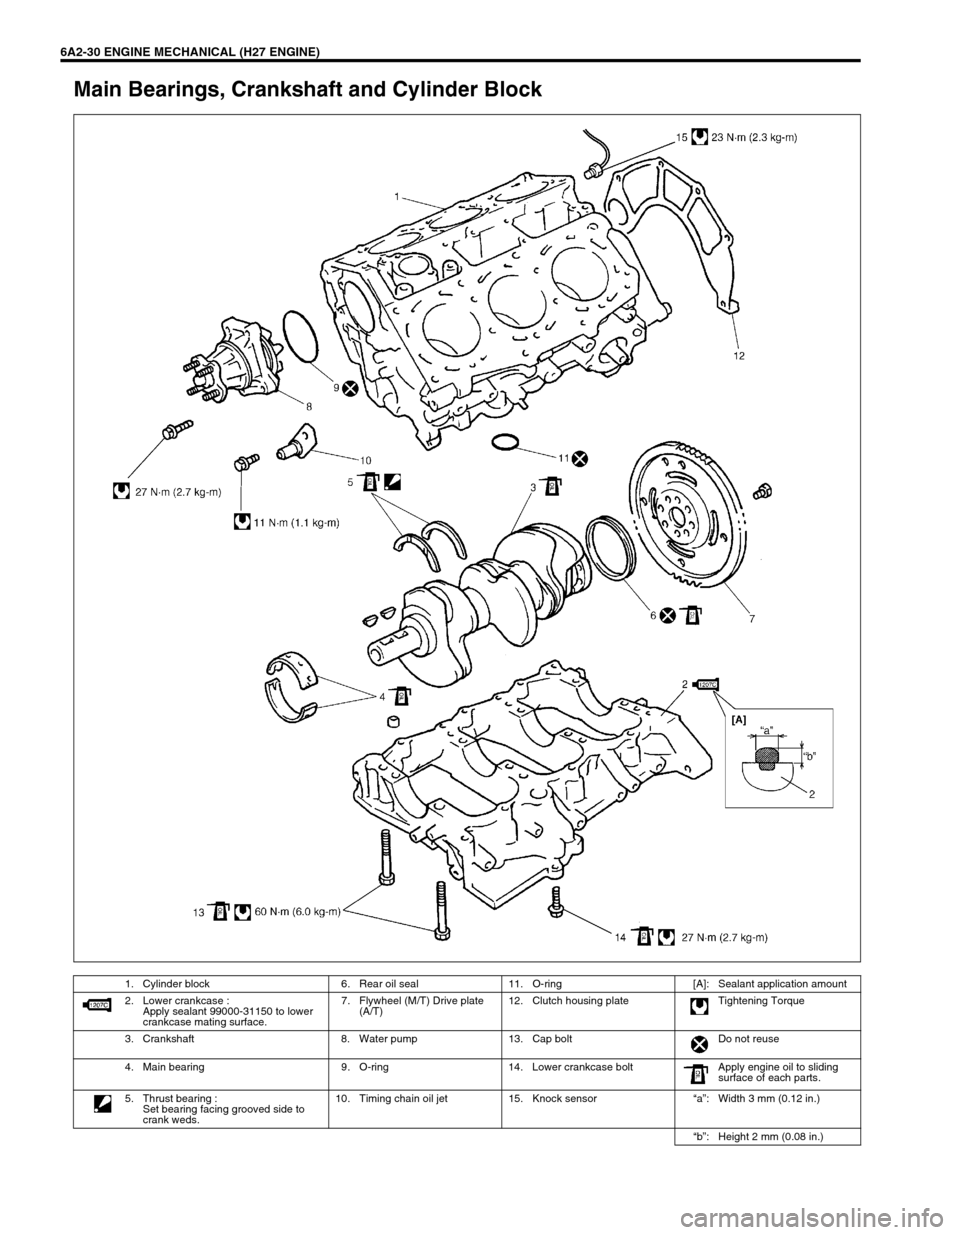 SUZUKI GRAND VITARA 1999 2.G Service Manual 6A2-30 ENGINE MECHANICAL (H27 ENGINE)
Main Bearings, Crankshaft and Cylinder Block
1. Cylinder block 6. Rear oil seal 11. O-ring [A]: Sealant application amount
2. Lower crankcase :
Apply sealant 9900